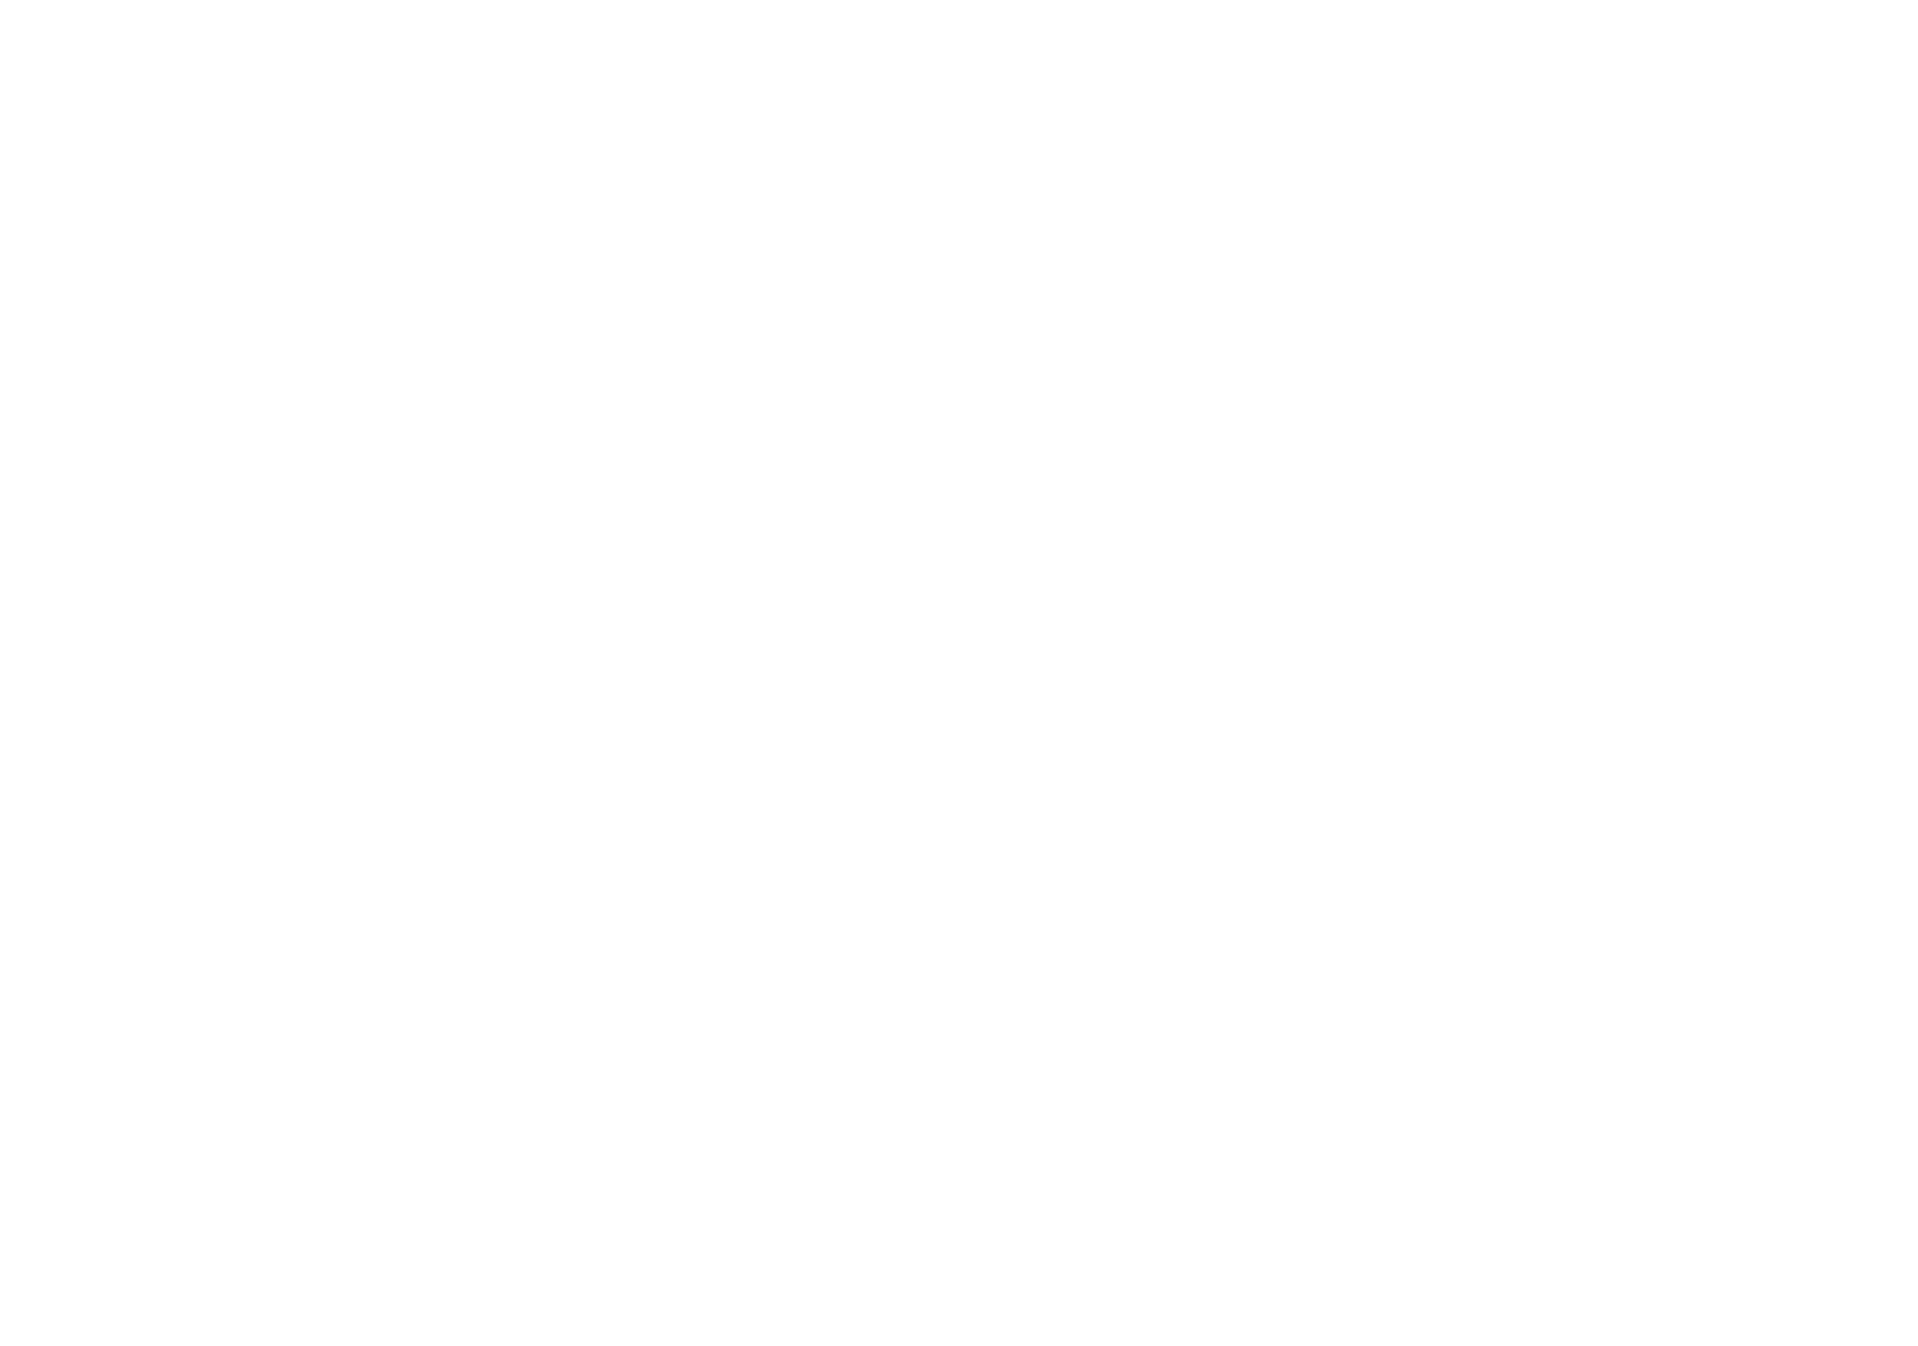 Atlas For Media Services